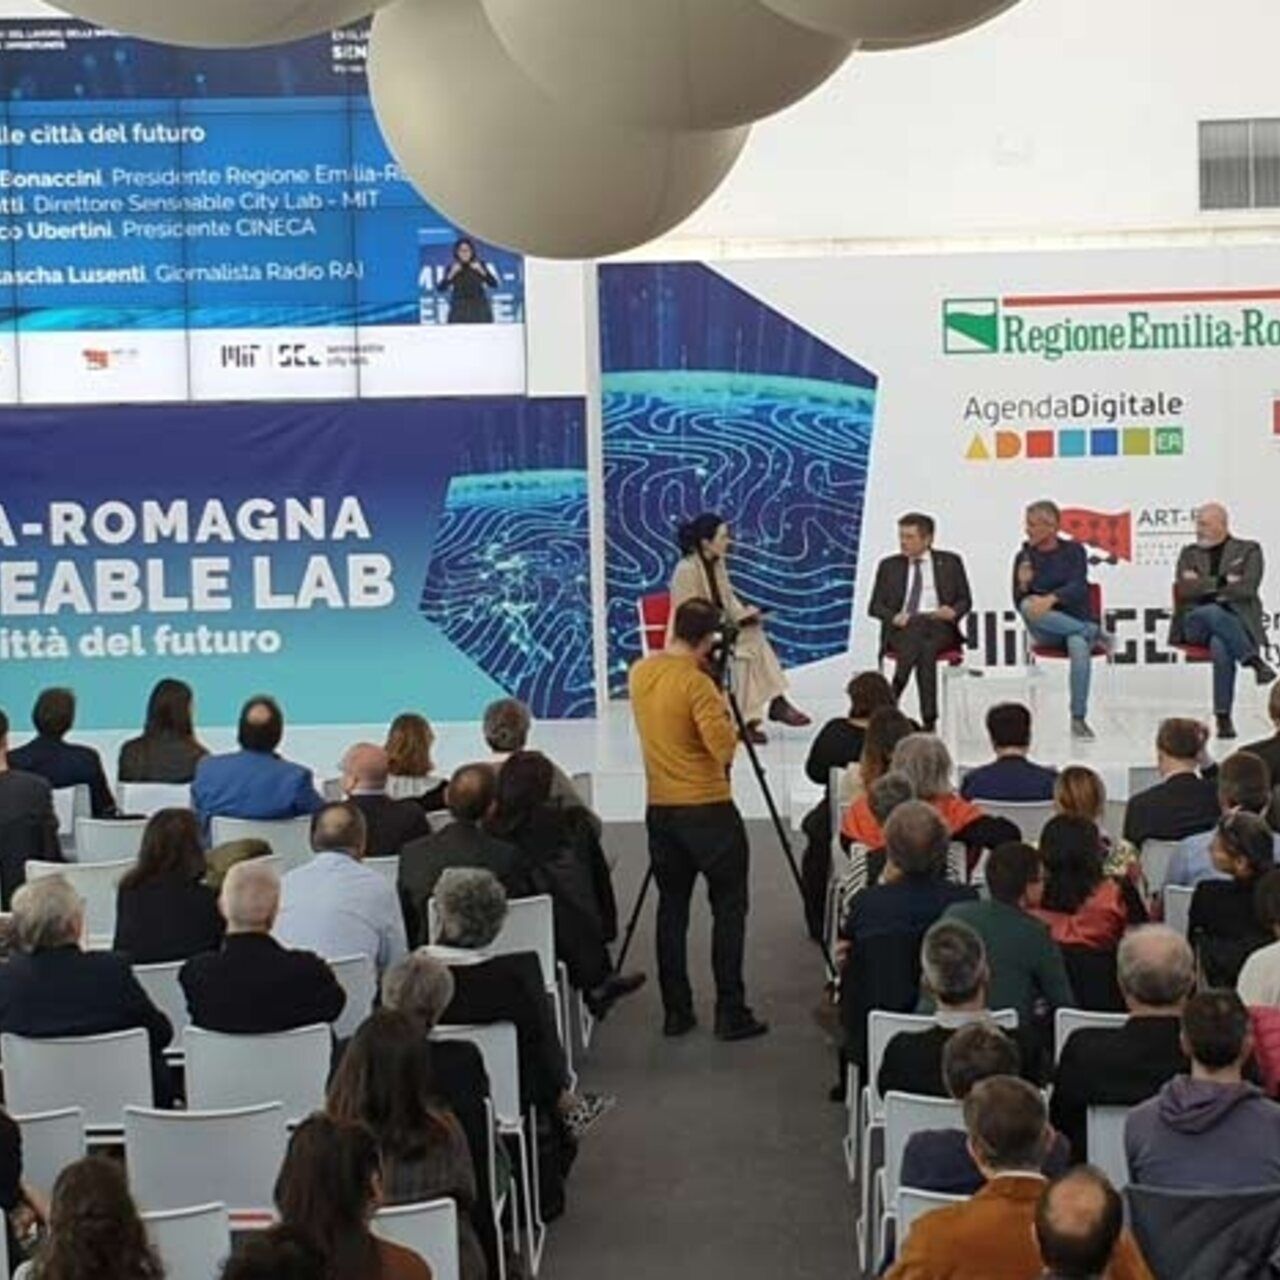 Massachusetts Institute of Technology: MIT Senseable City Lab ankommer til Bologna Tecnopolo for at forestille sig fremtidens byer takket være samarbejdet med Emilia-Romagna-regionen